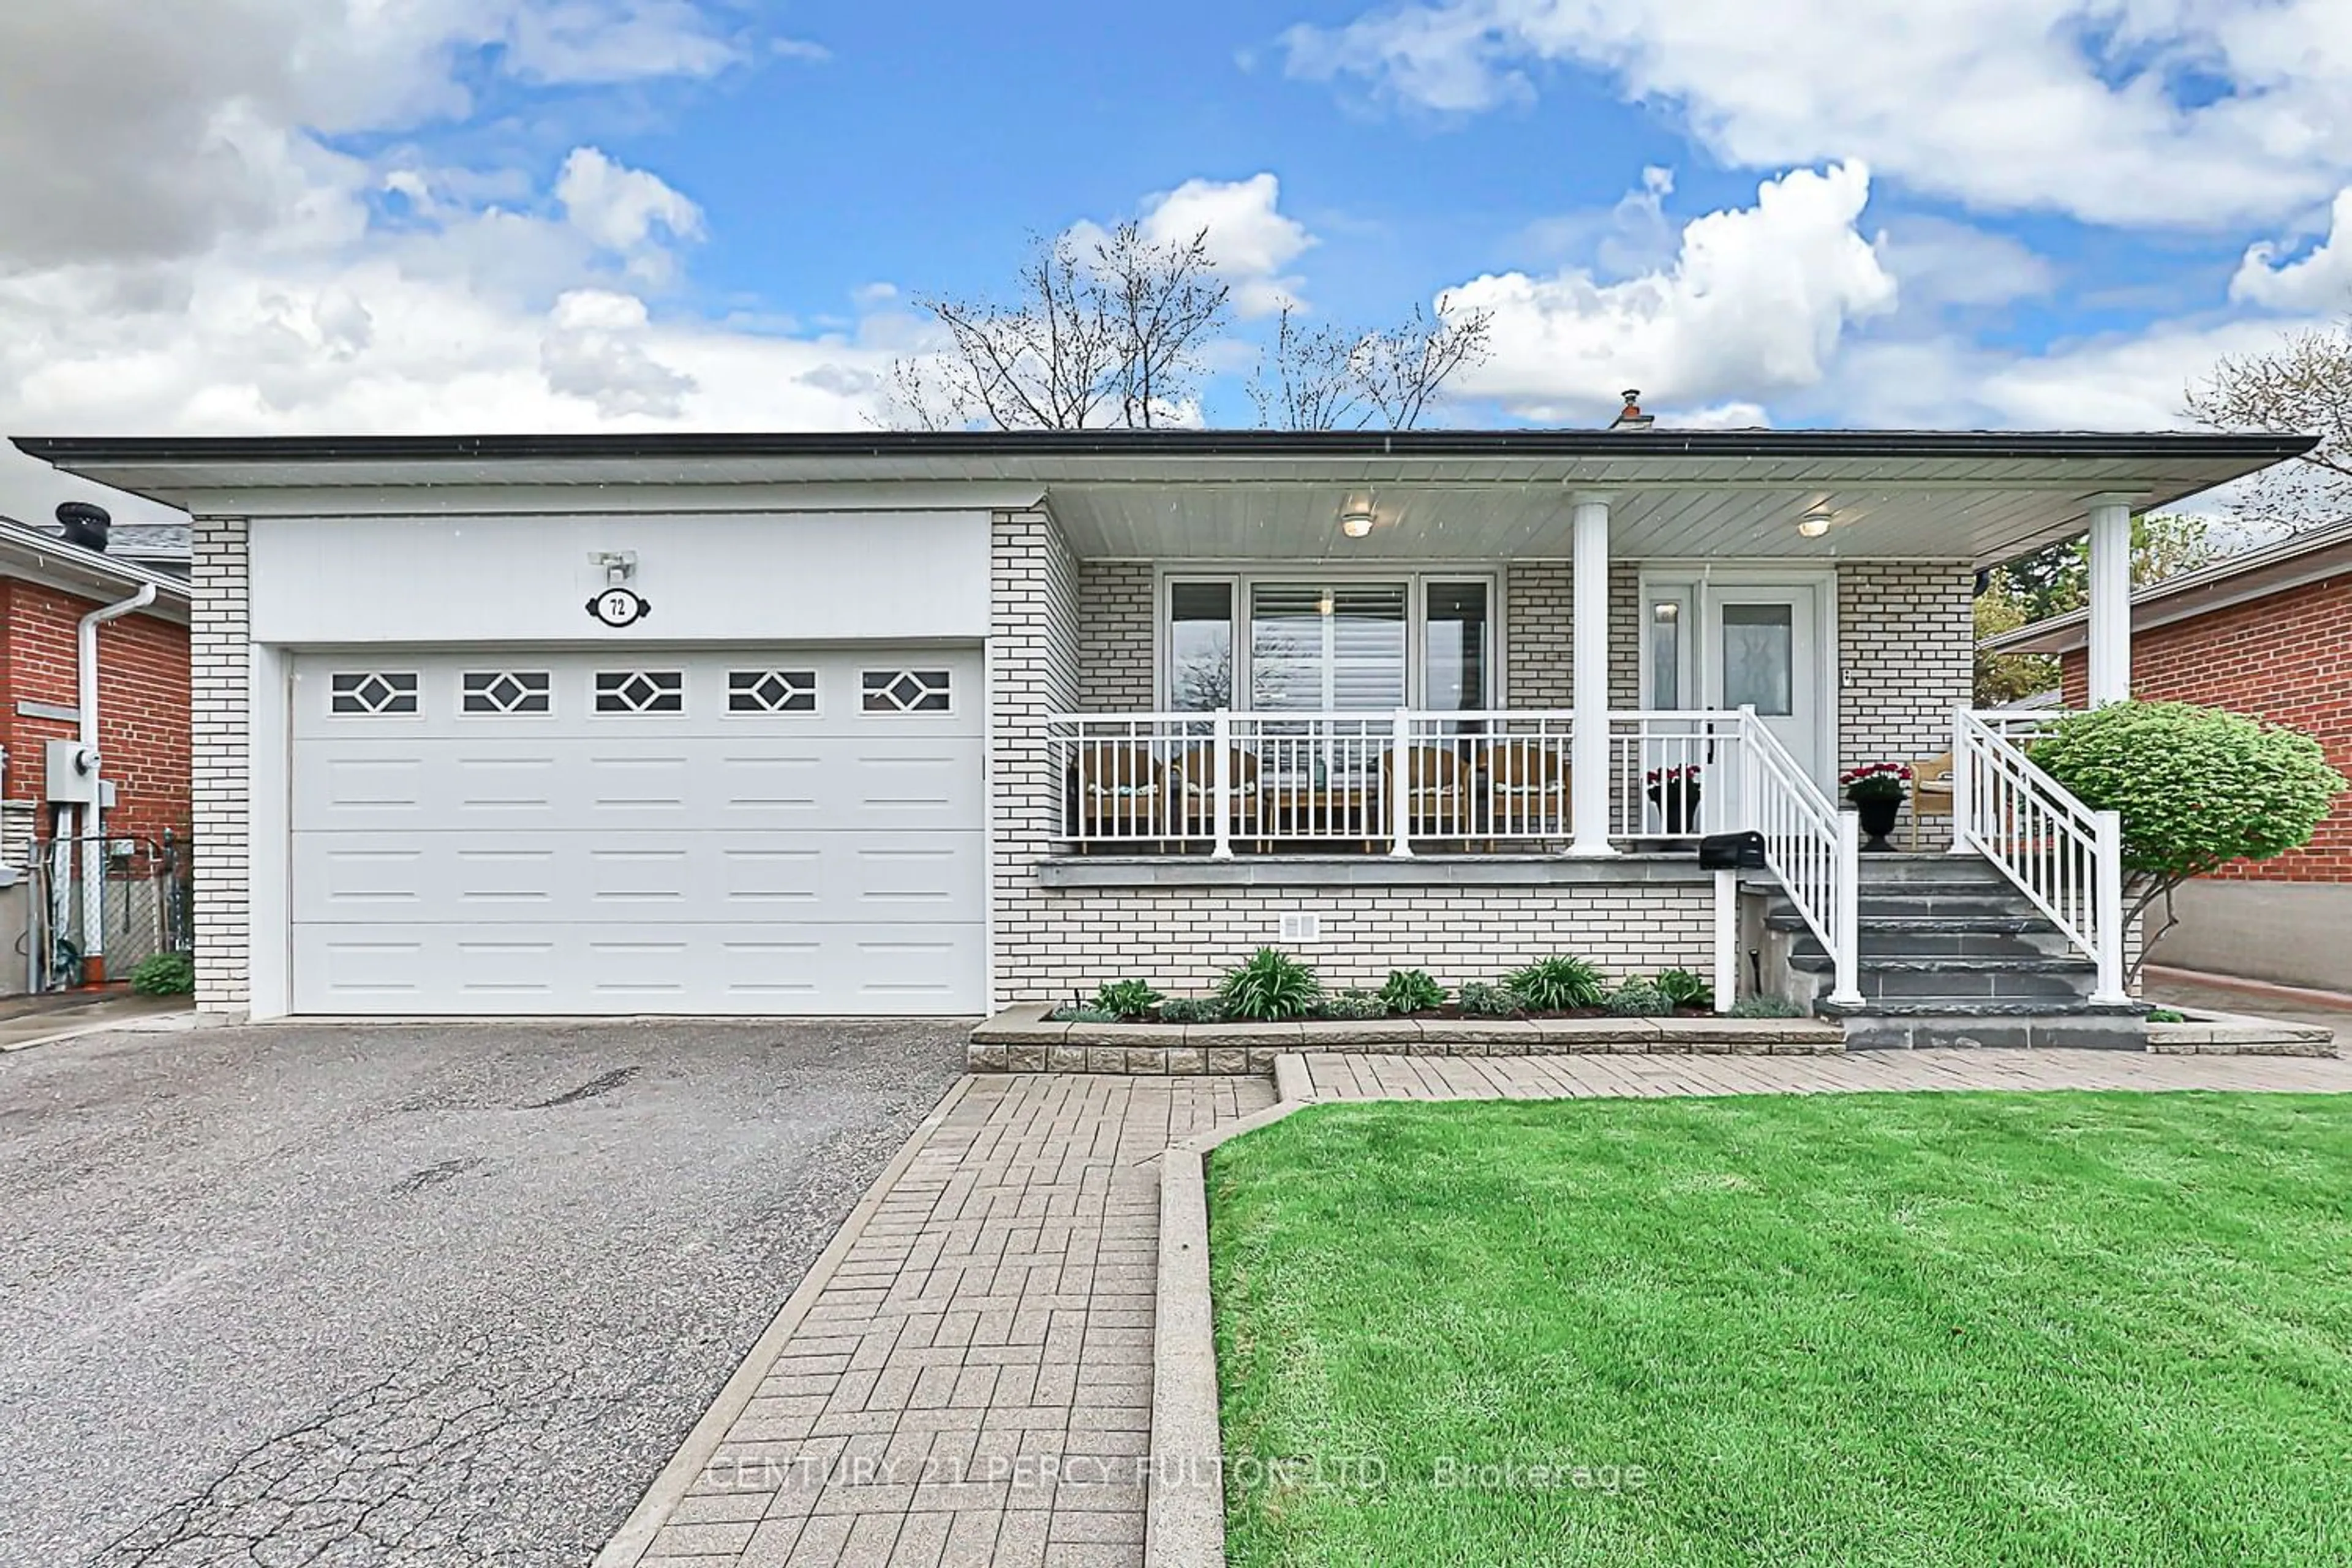 Home with vinyl exterior material for 72 Orangewood Cres, Toronto Ontario M1W 1C7